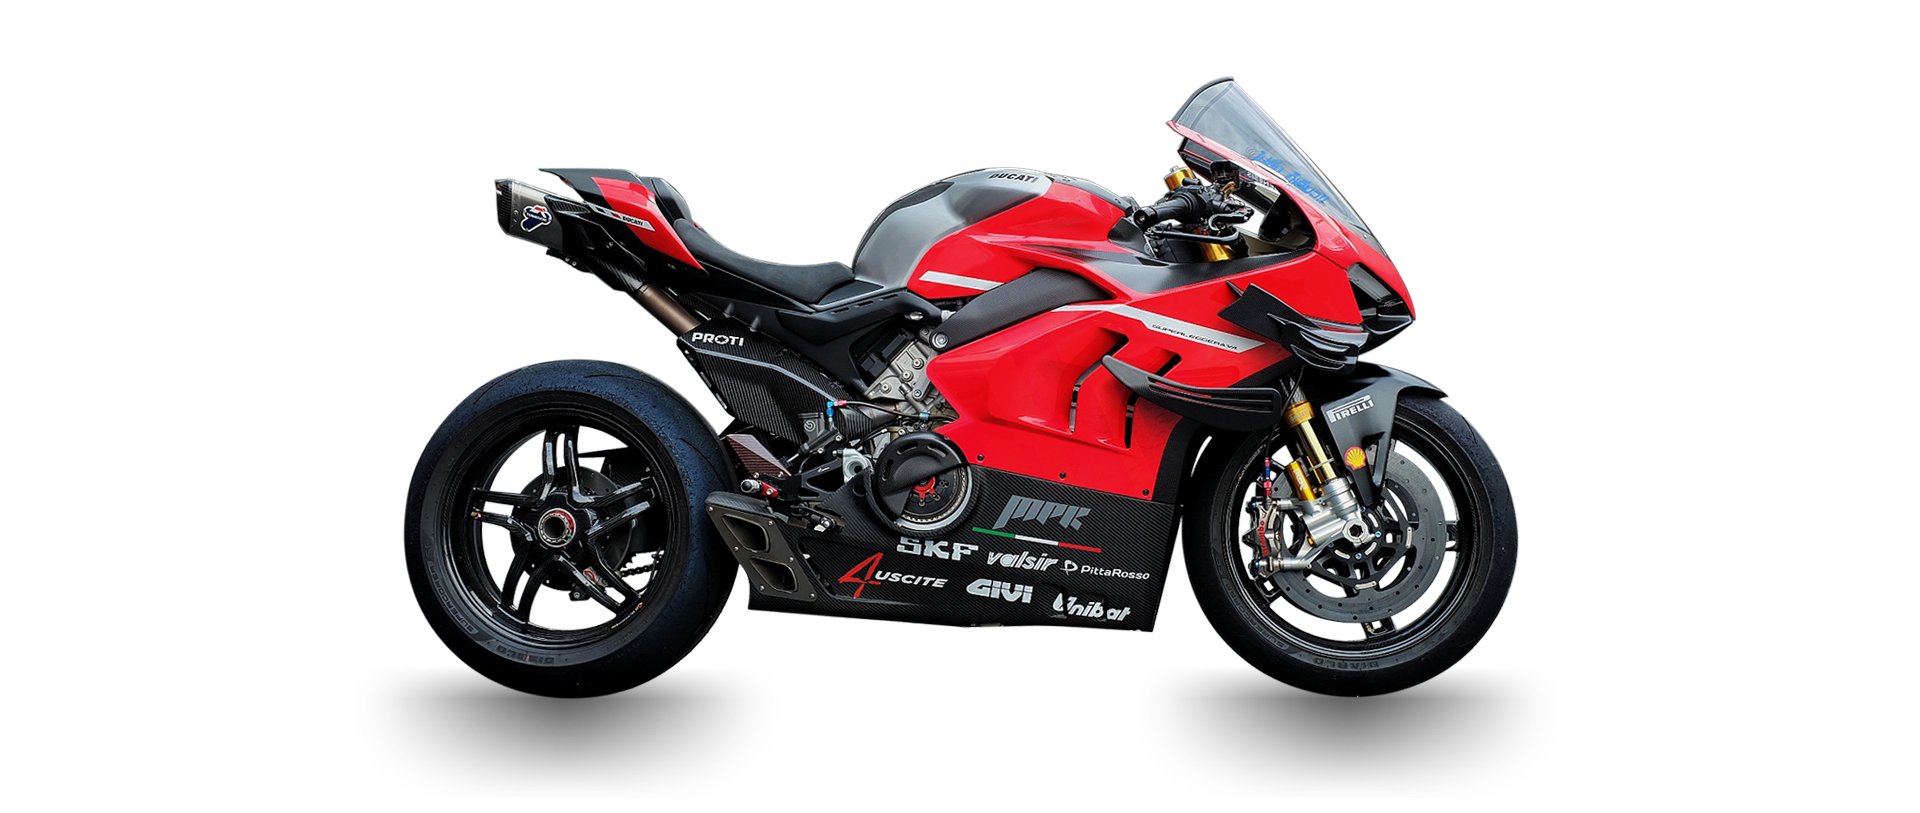 Ducati Superleggera termignoni stm bst ท่อเทอมิแฟริ่งคลัชแห้งล้อคาร์บอนจานเบรค brembo